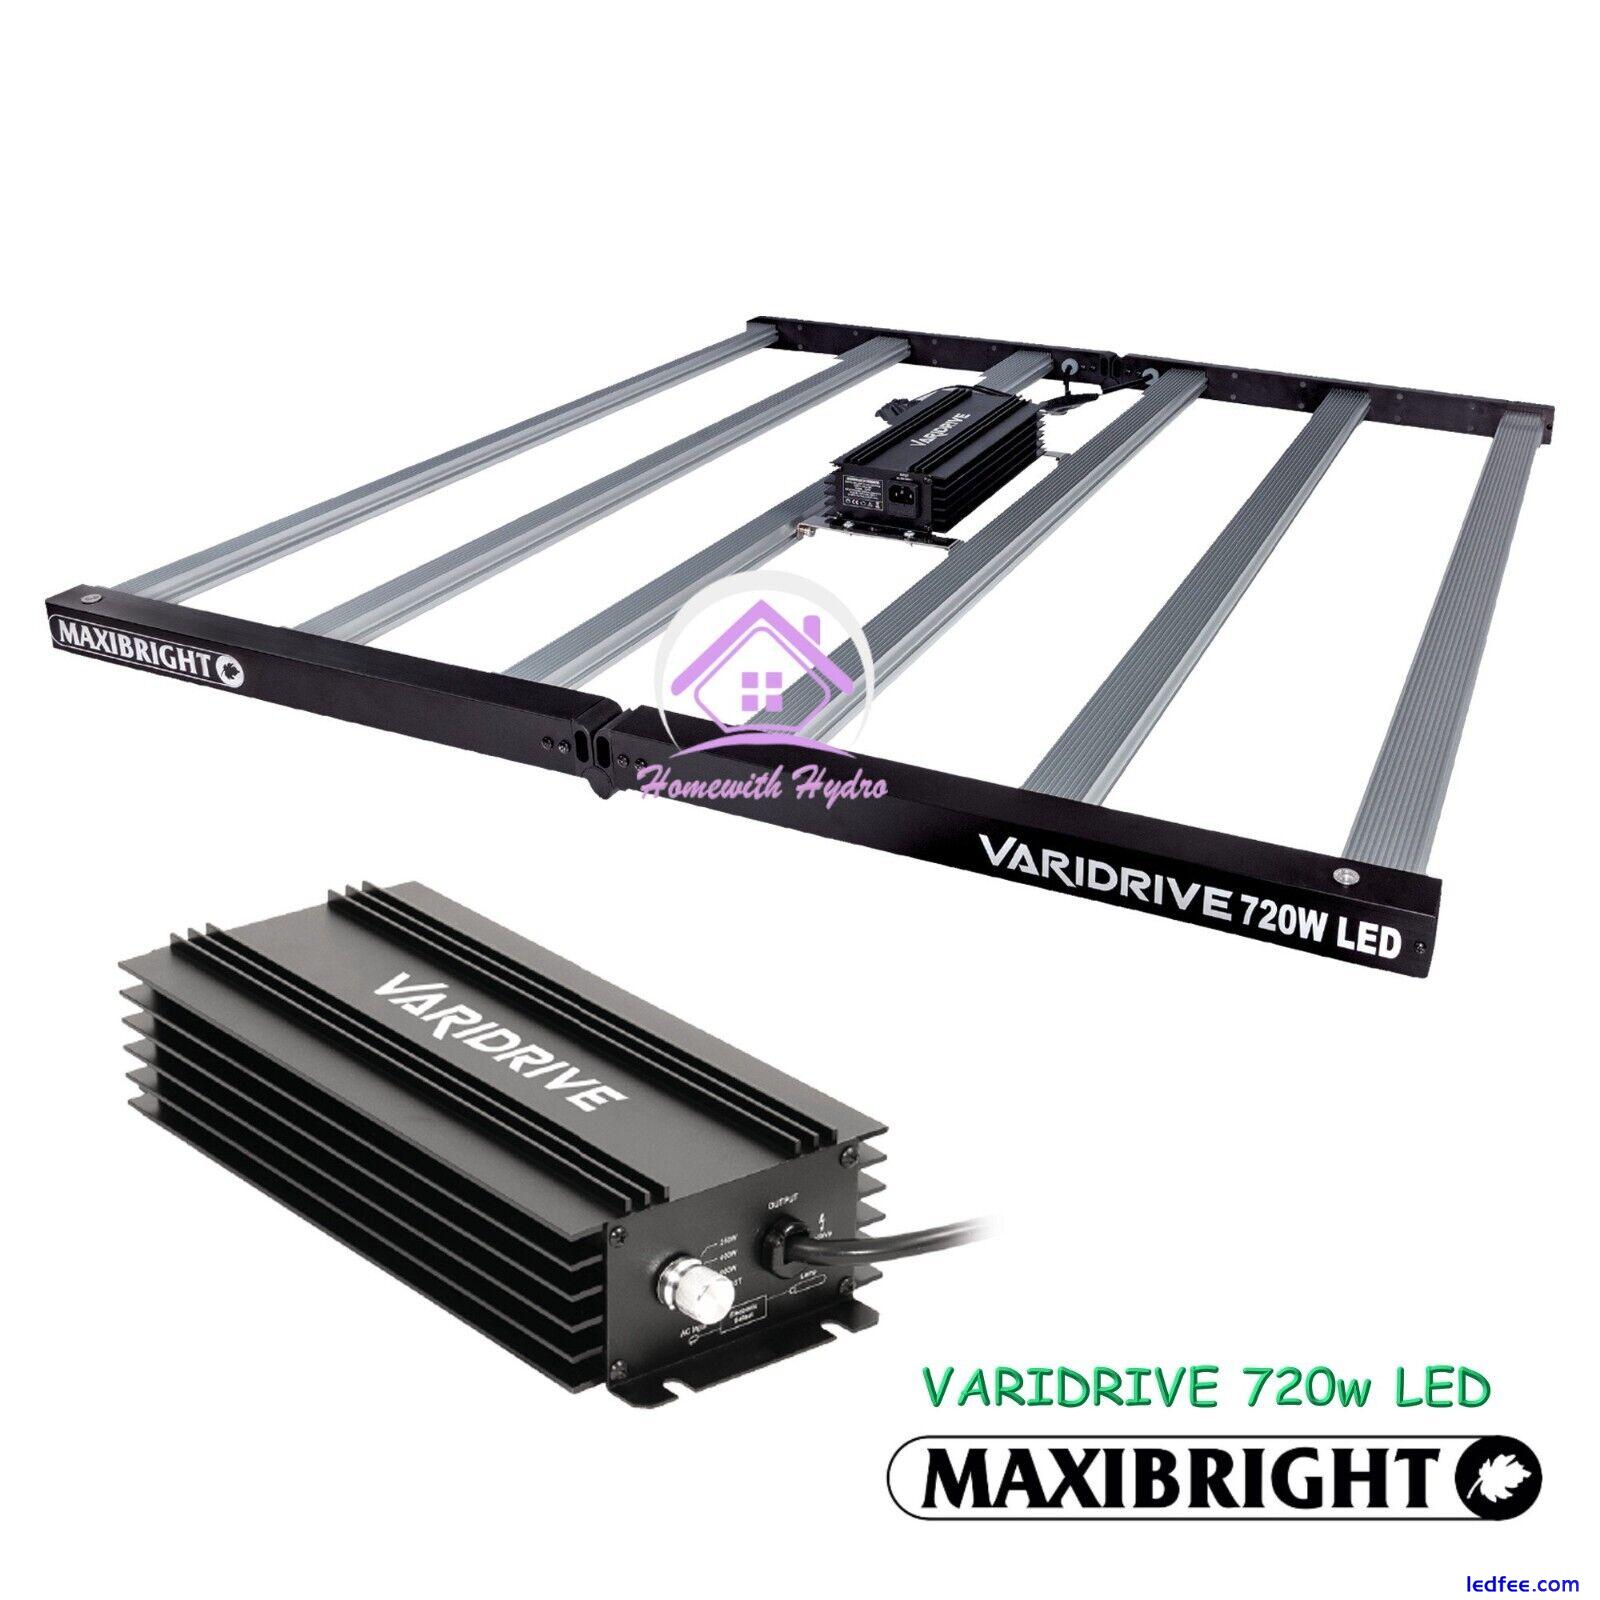 MAXIBRIGHT VARIDRIVE 720w LED 6 Bar Fixture Grow Light Hydroponic Full Spectrum 5 